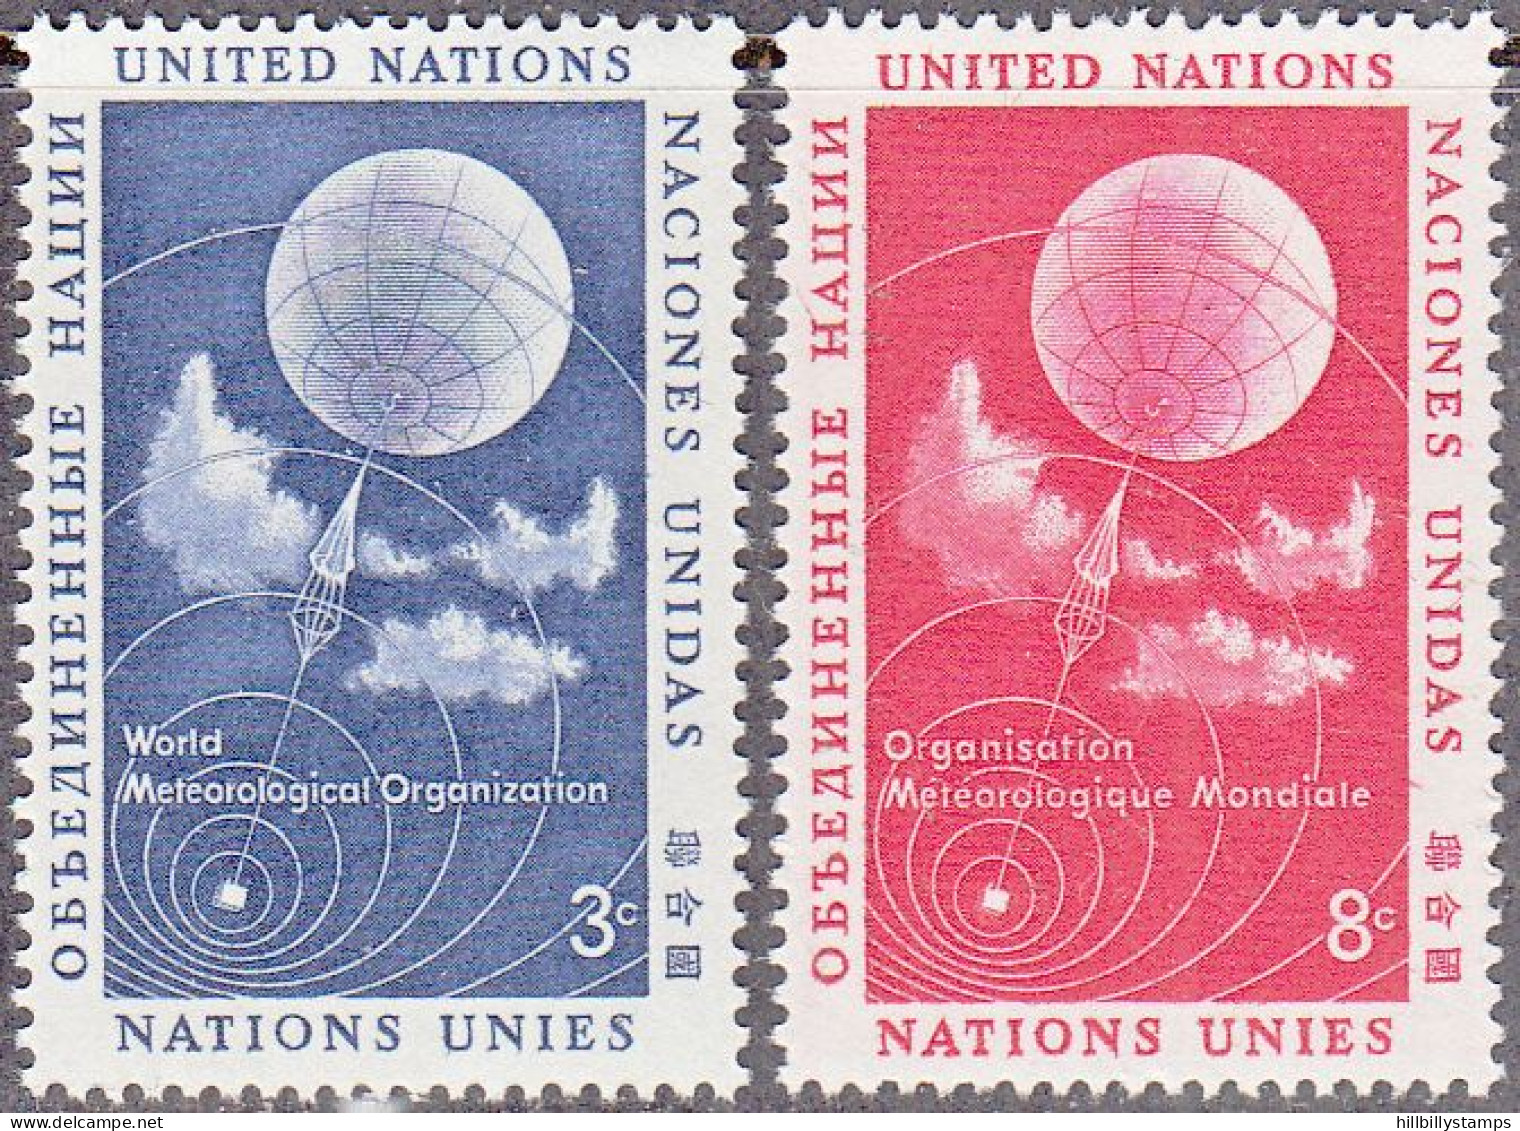 UNITED NATIONS NY   SCOTT NO 49-50    MNH     YEAR  1957 - Neufs